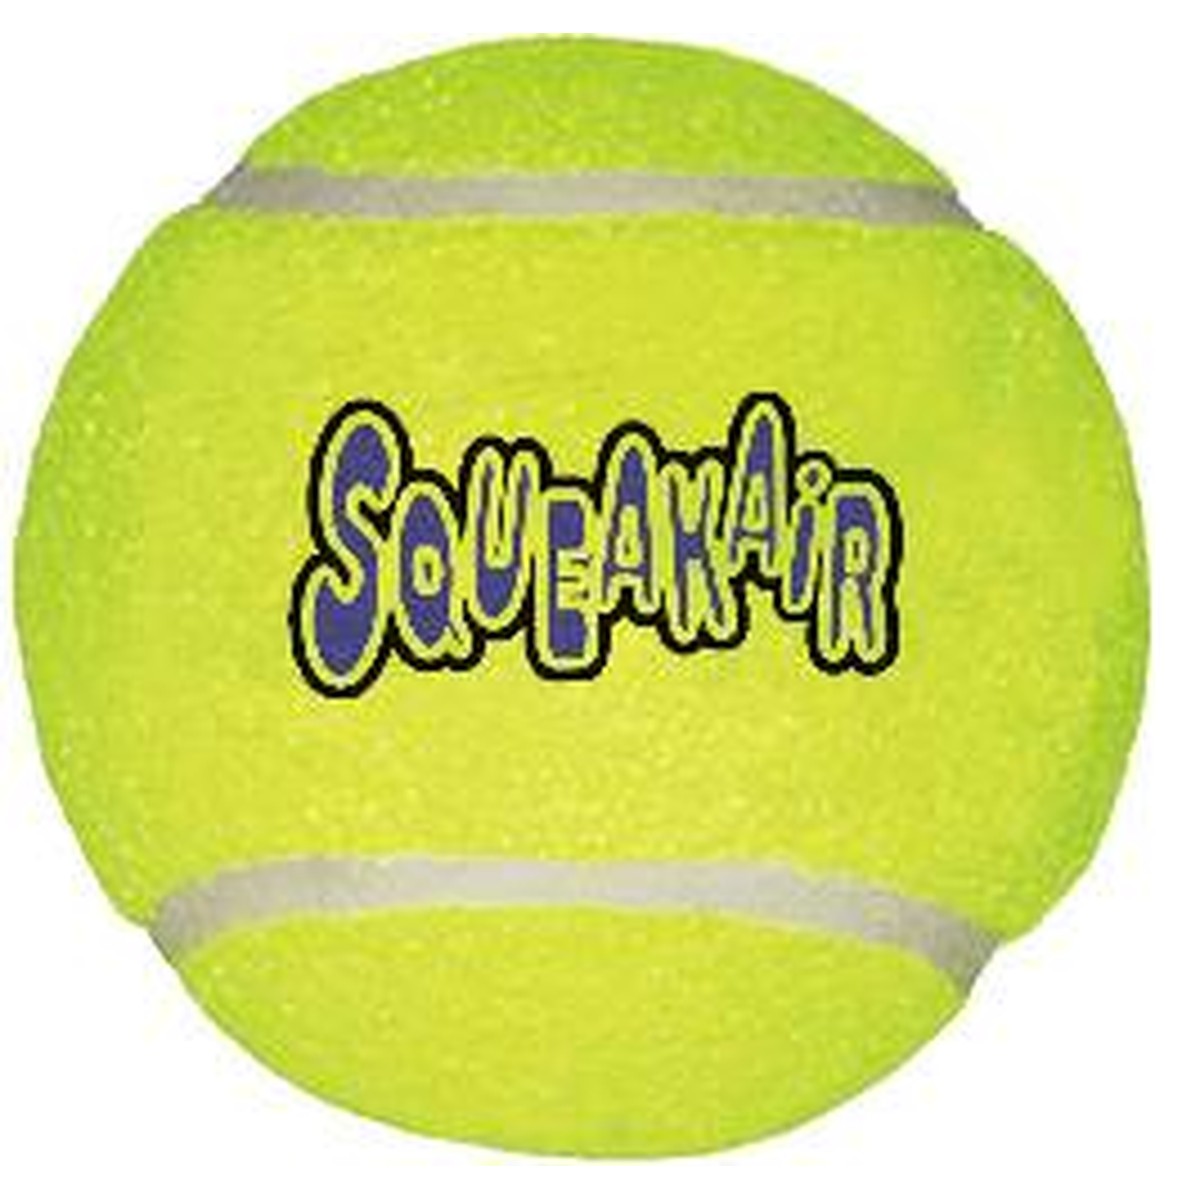   Air Squeaker balle de tennis.3pces Ø 6cm  6cm